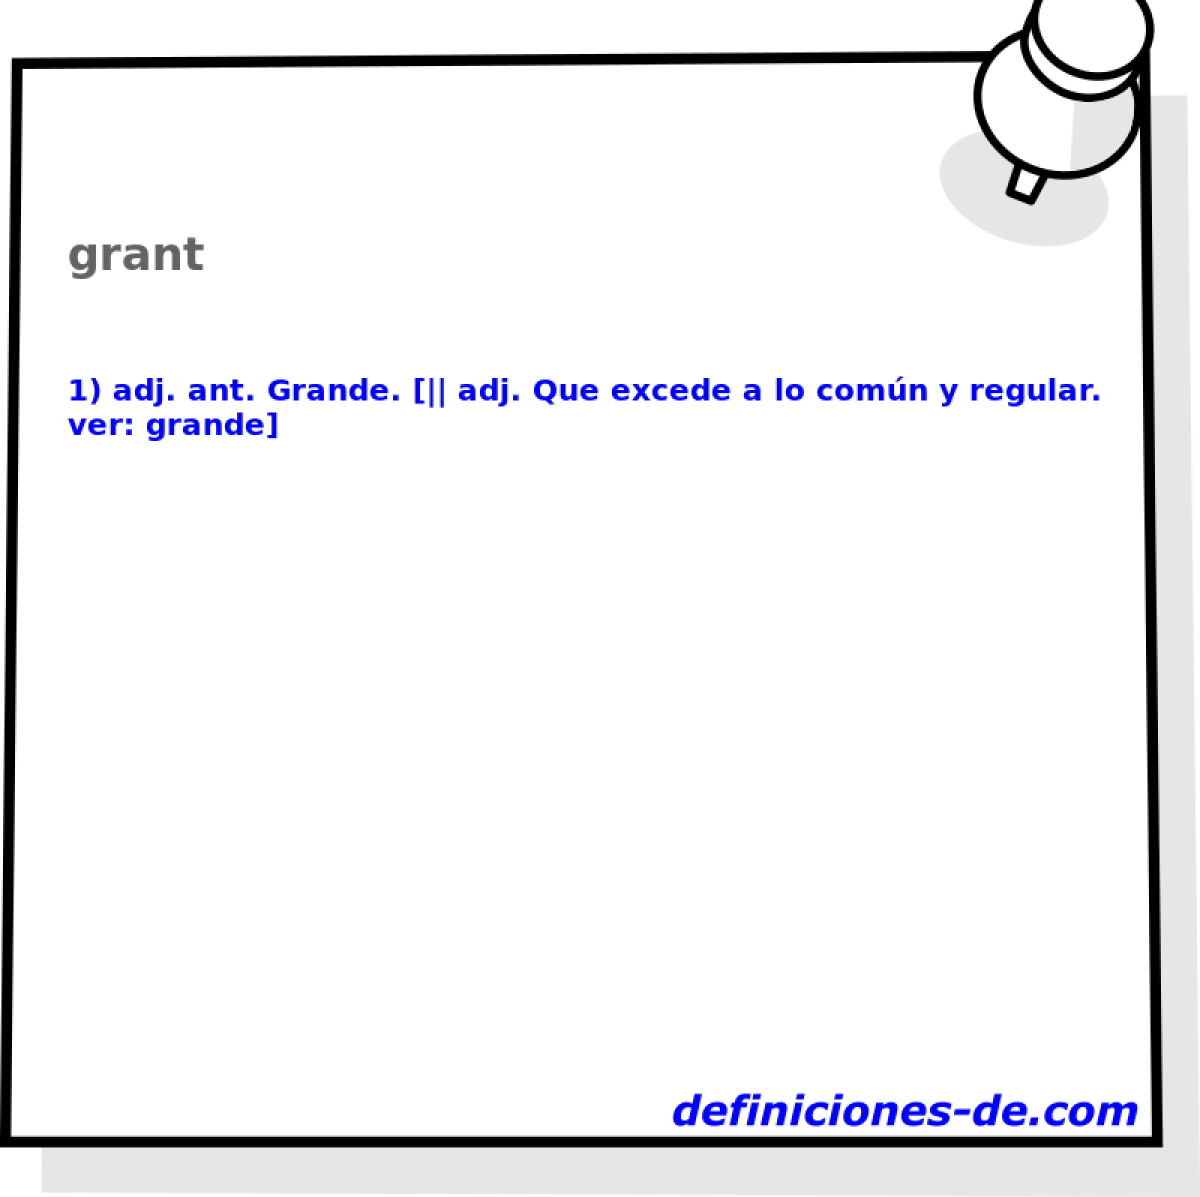 grant 